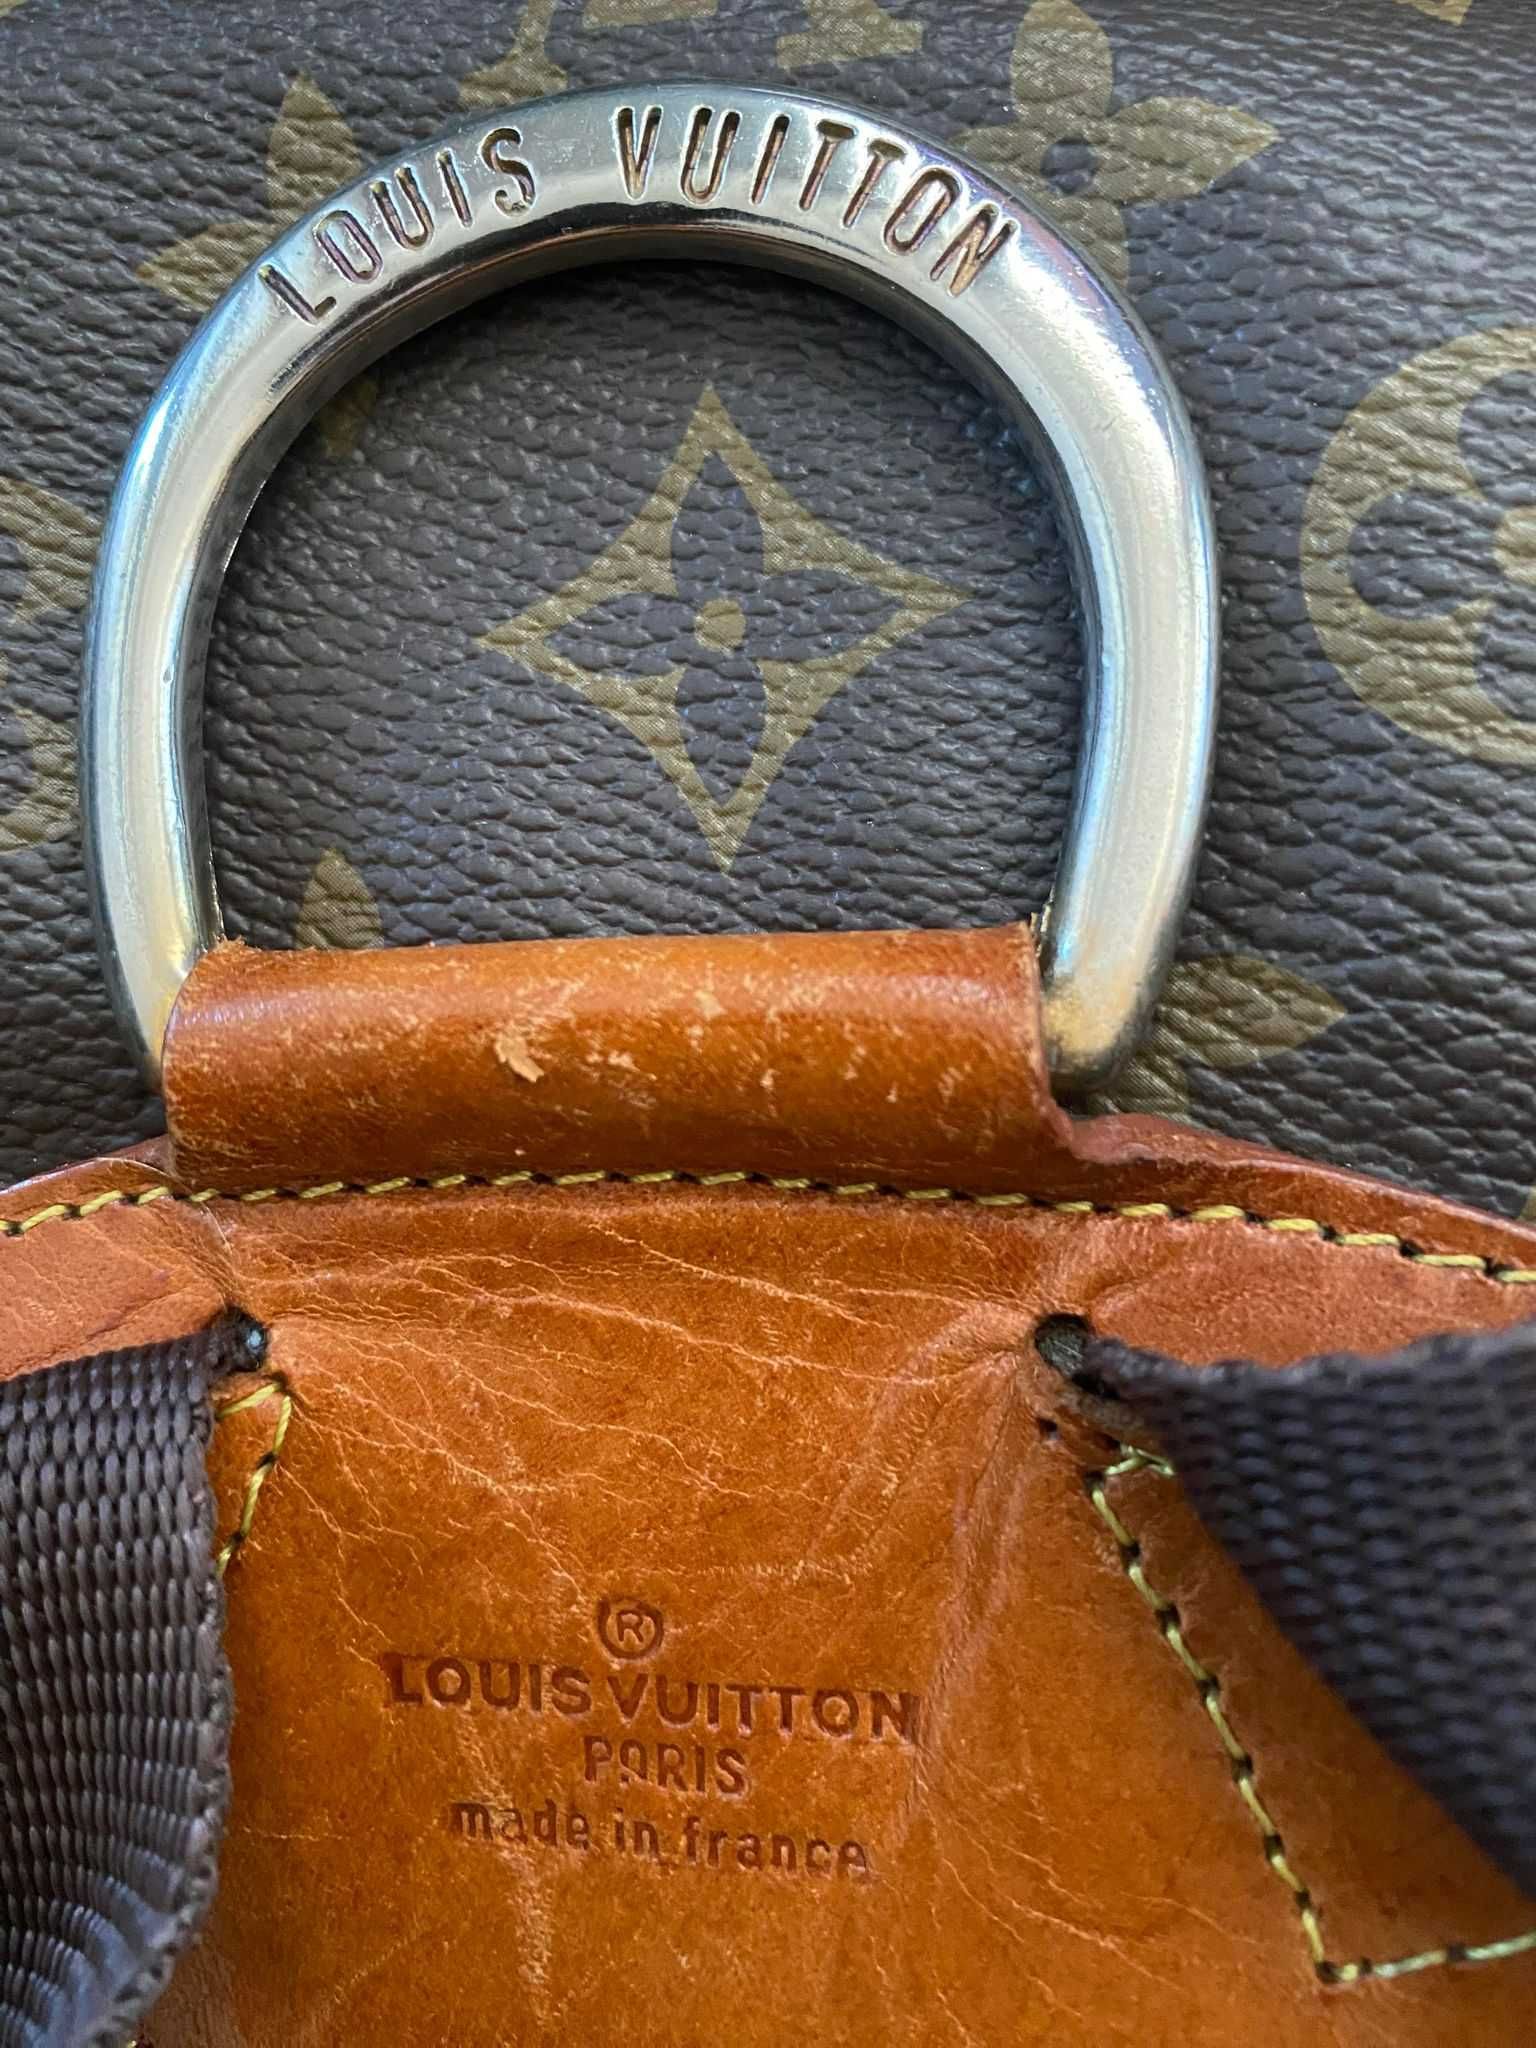 Rucsac backpack, Louis Vuitton